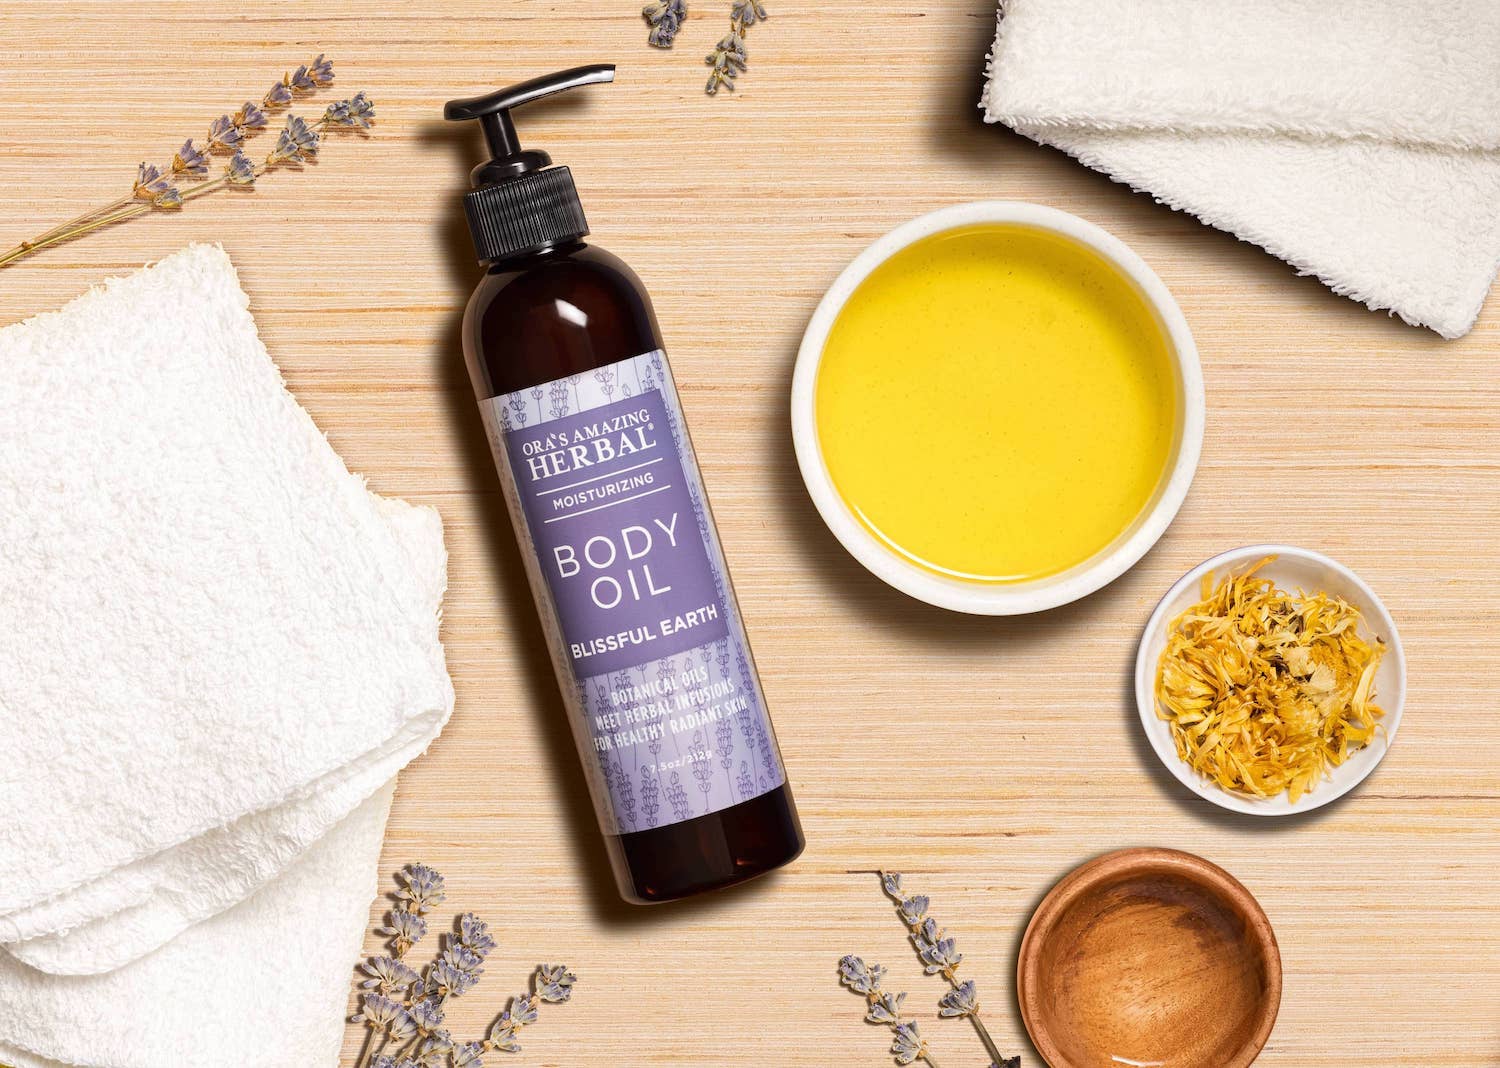 Body Oil, Clean – Ora's Amazing Herbal